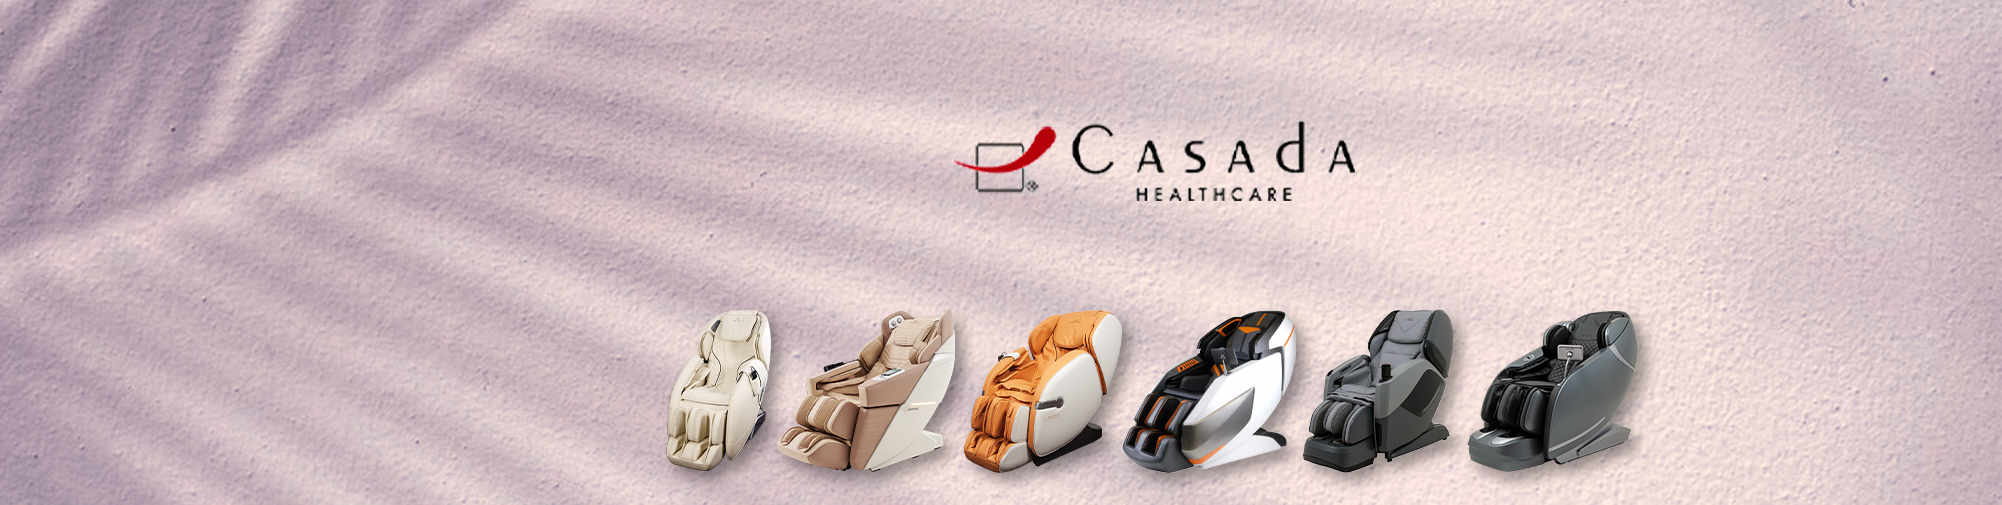 Casada - надежный партнер | Massage Chair World